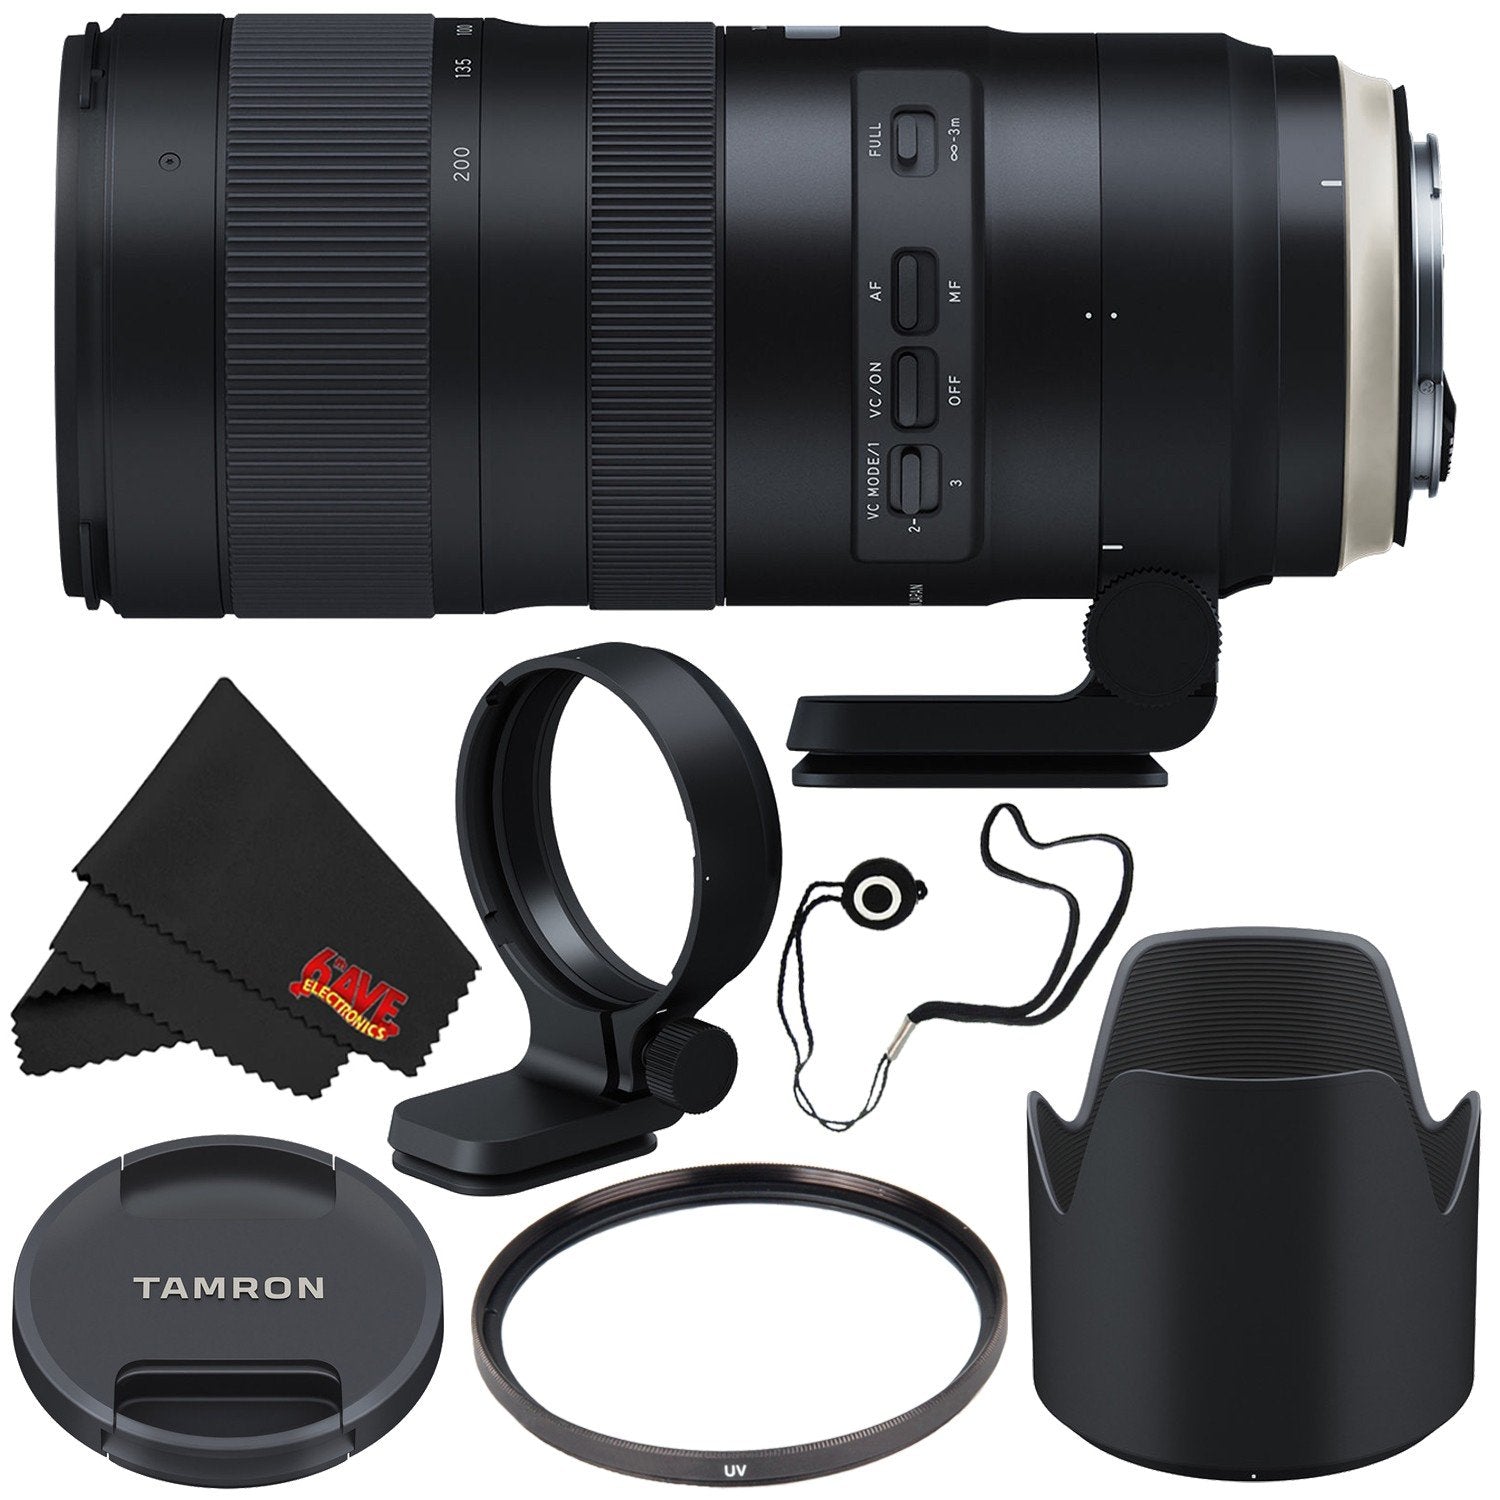 6Ave Tamron SP 70-200mm f/2.8 Di VC USD G2 Lens for Canon EF (International Model) + 77mm UV Filter + Lens Cap Keeper +